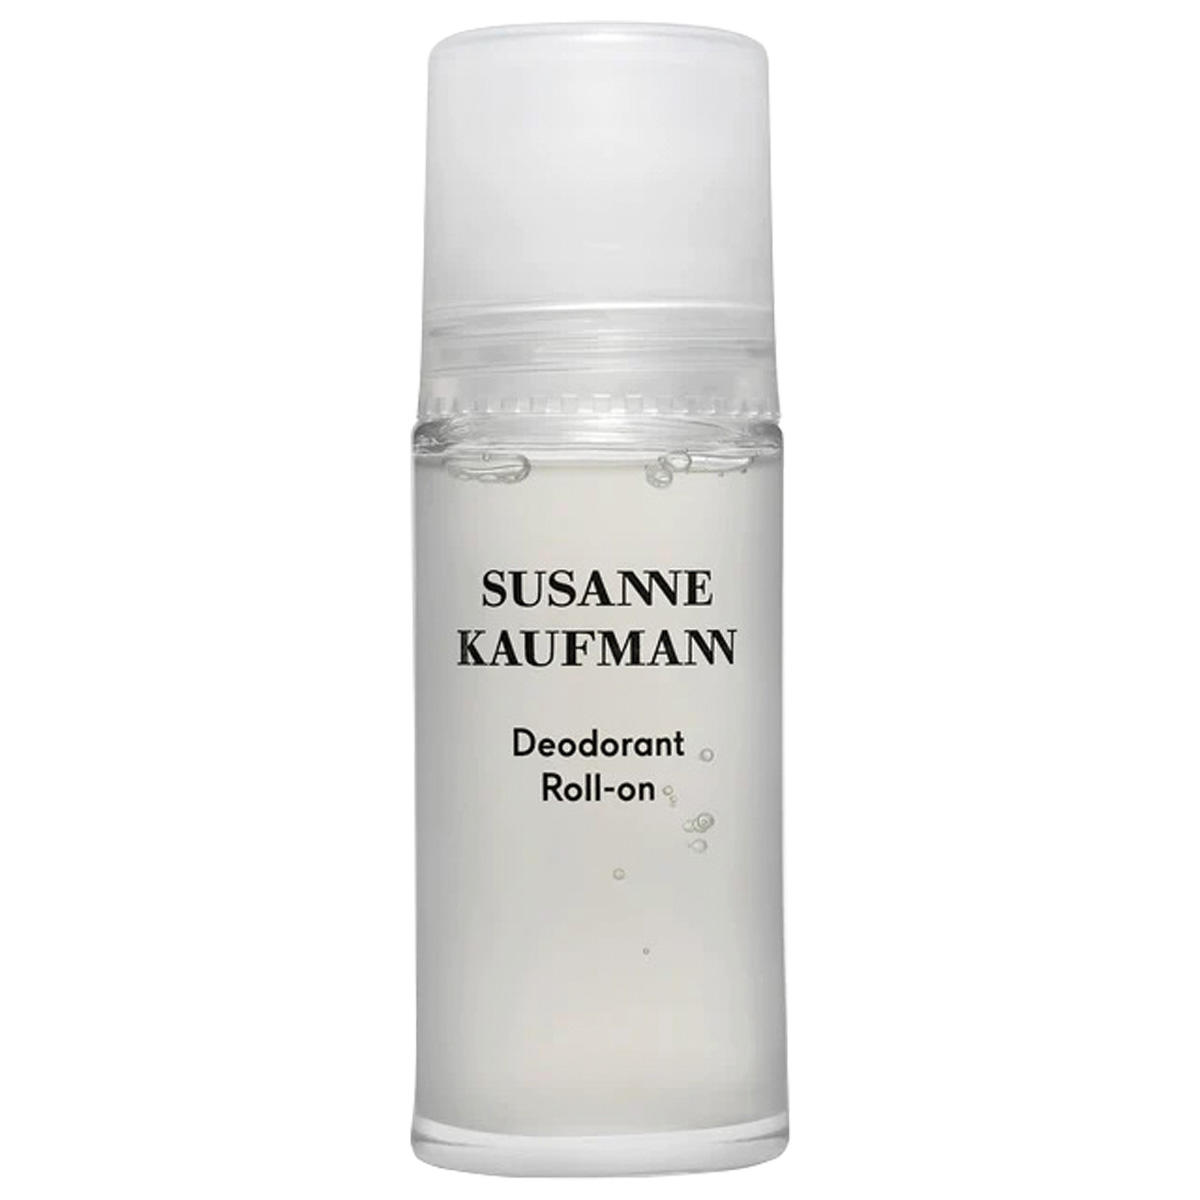 Susanne Kaufmann Deodorant Roll-on 50 ml - 1